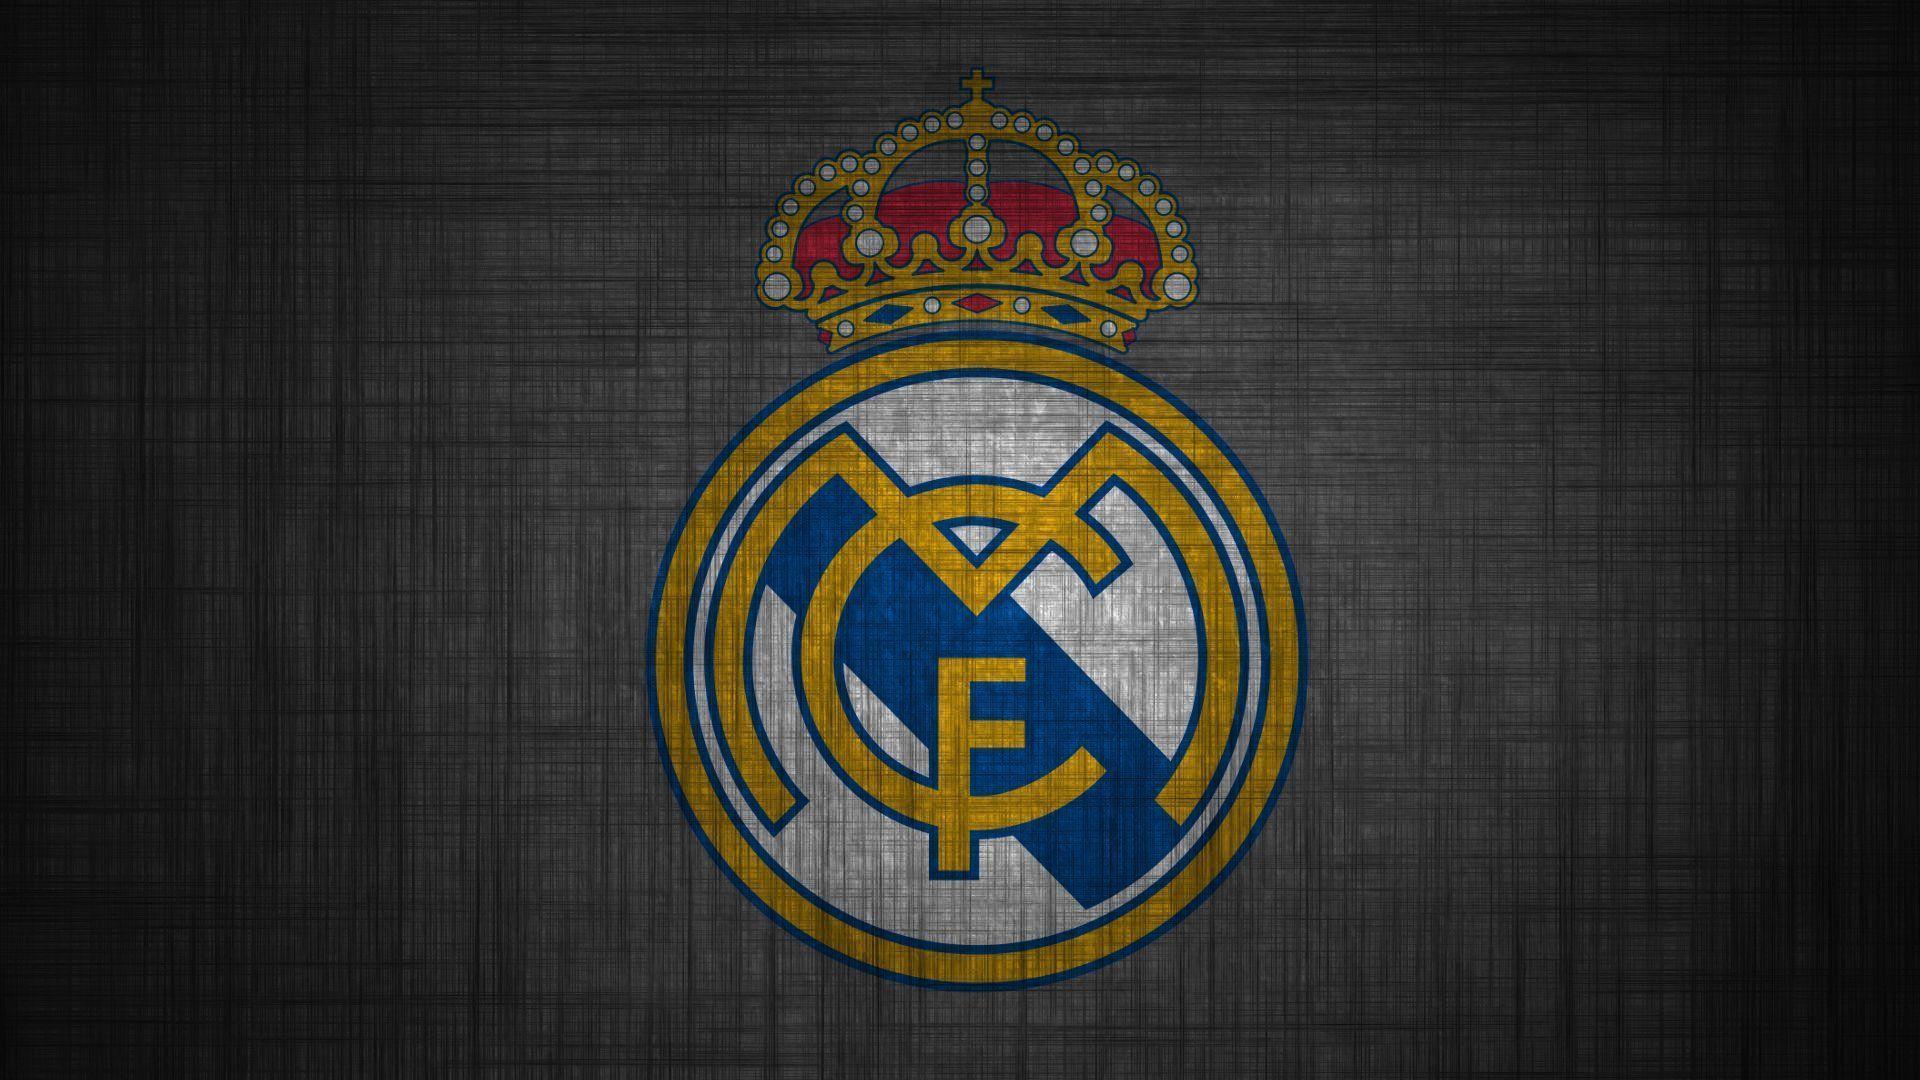 Soccer Real Madrid Wallpaper At Wallpaperbro